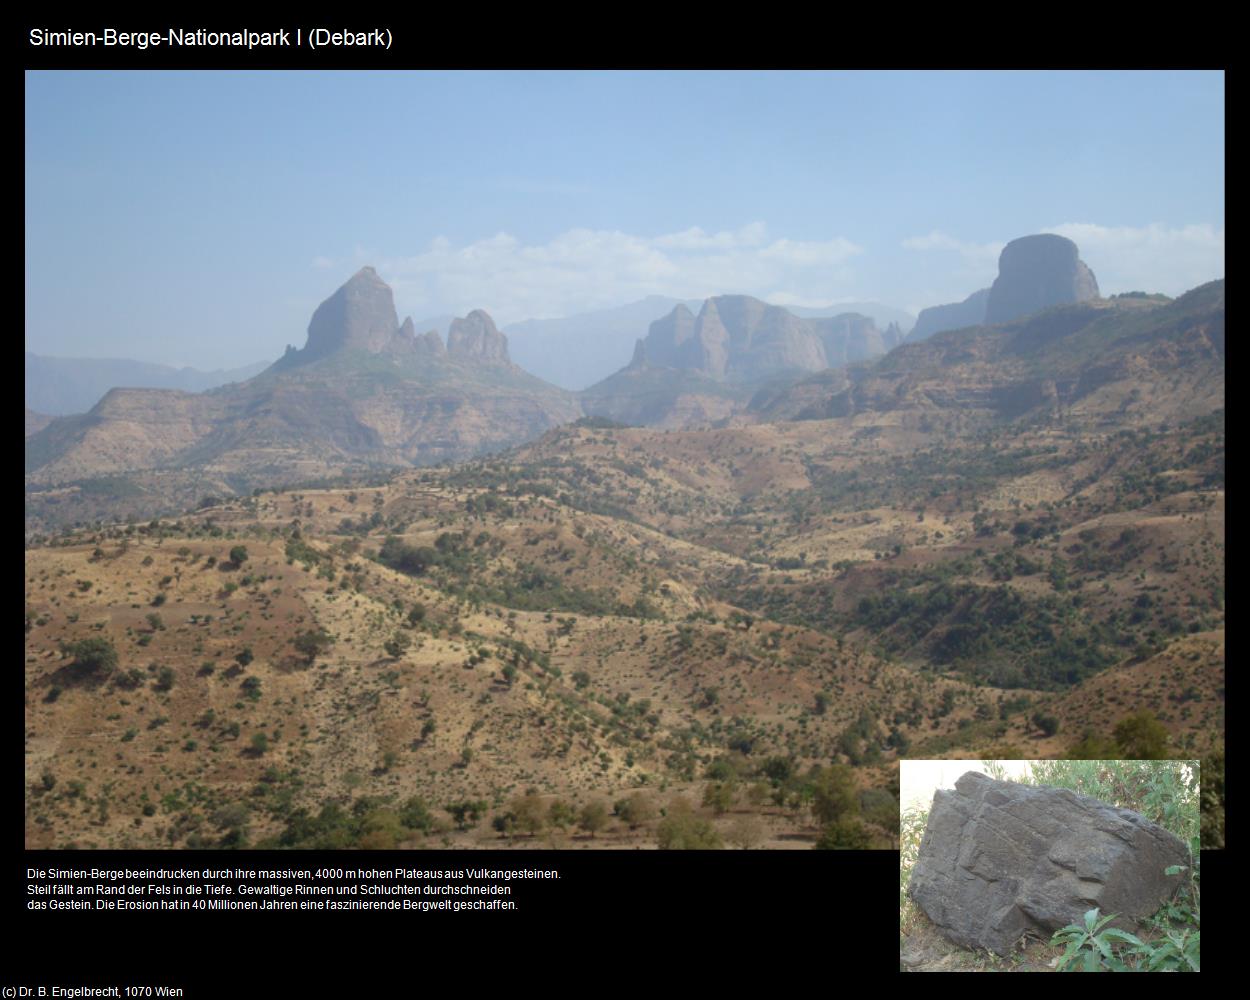 Simien-Berge-Nationalpark I (Debark) in Äthiopien